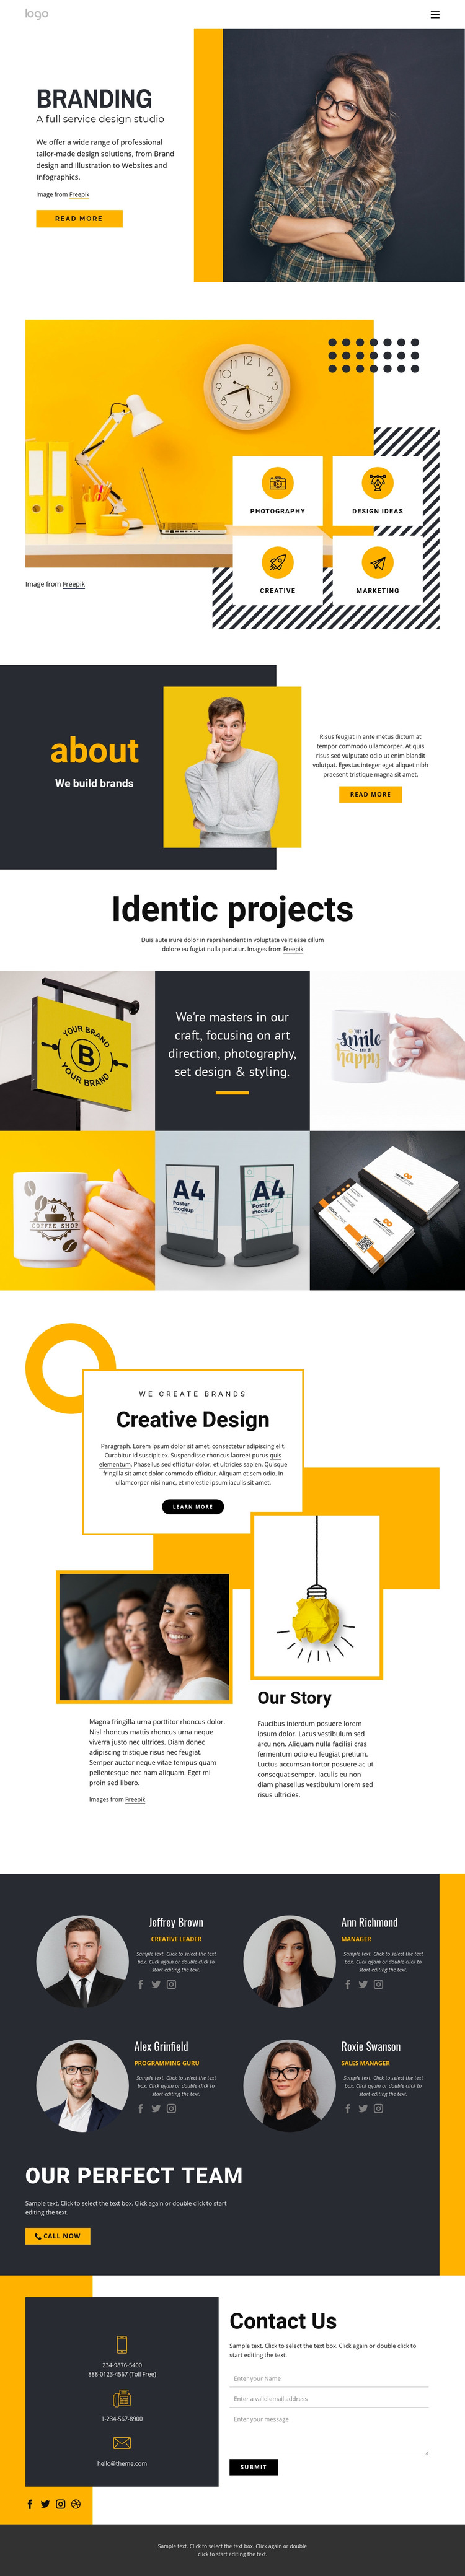 Full-service design studio Homepage Design